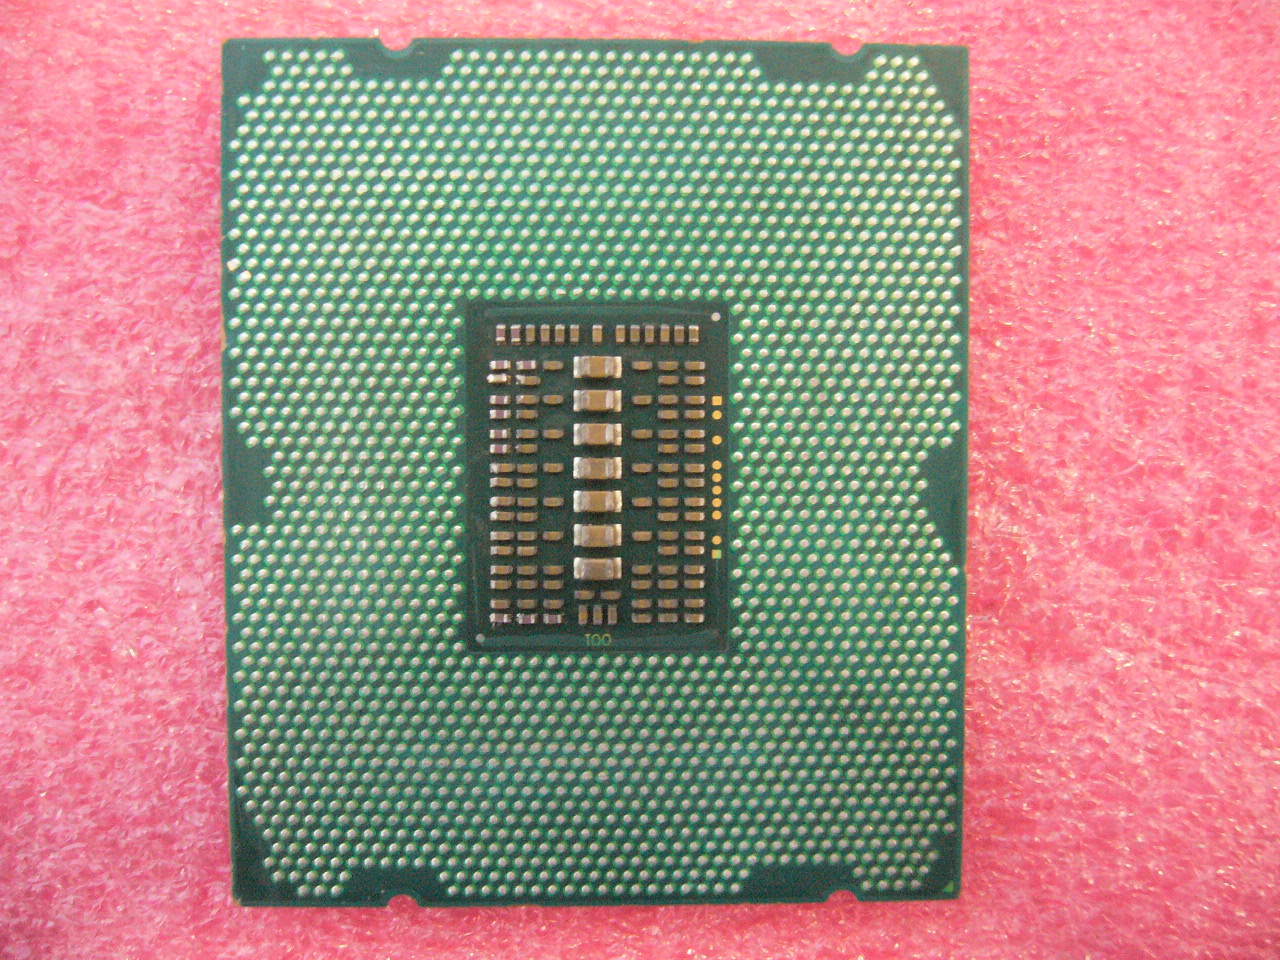 QTY 1x Intel CPU E5-2648LV2 CPU 10-Cores 1.9Ghz 25MB LGA2011 TDP 70W SR1A2 - Click Image to Close